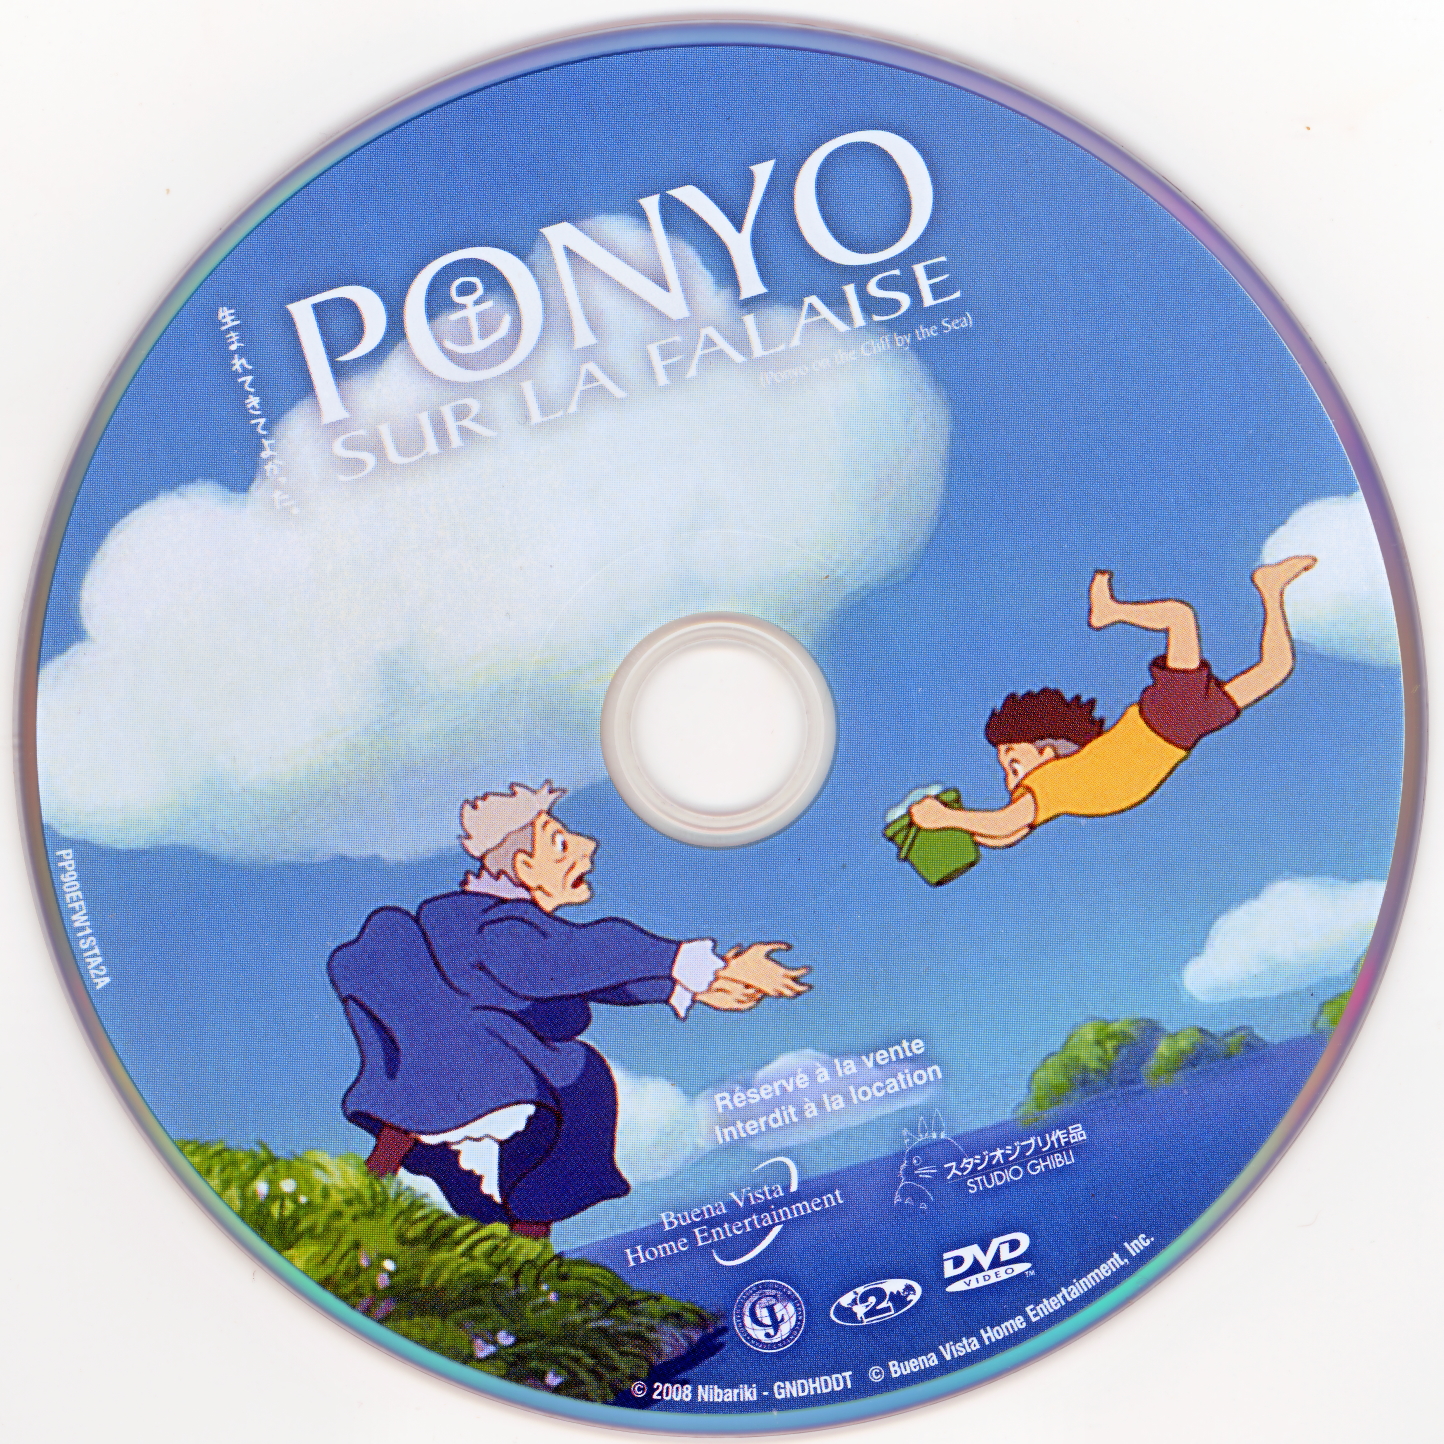 Ponyo sur la falaise v2